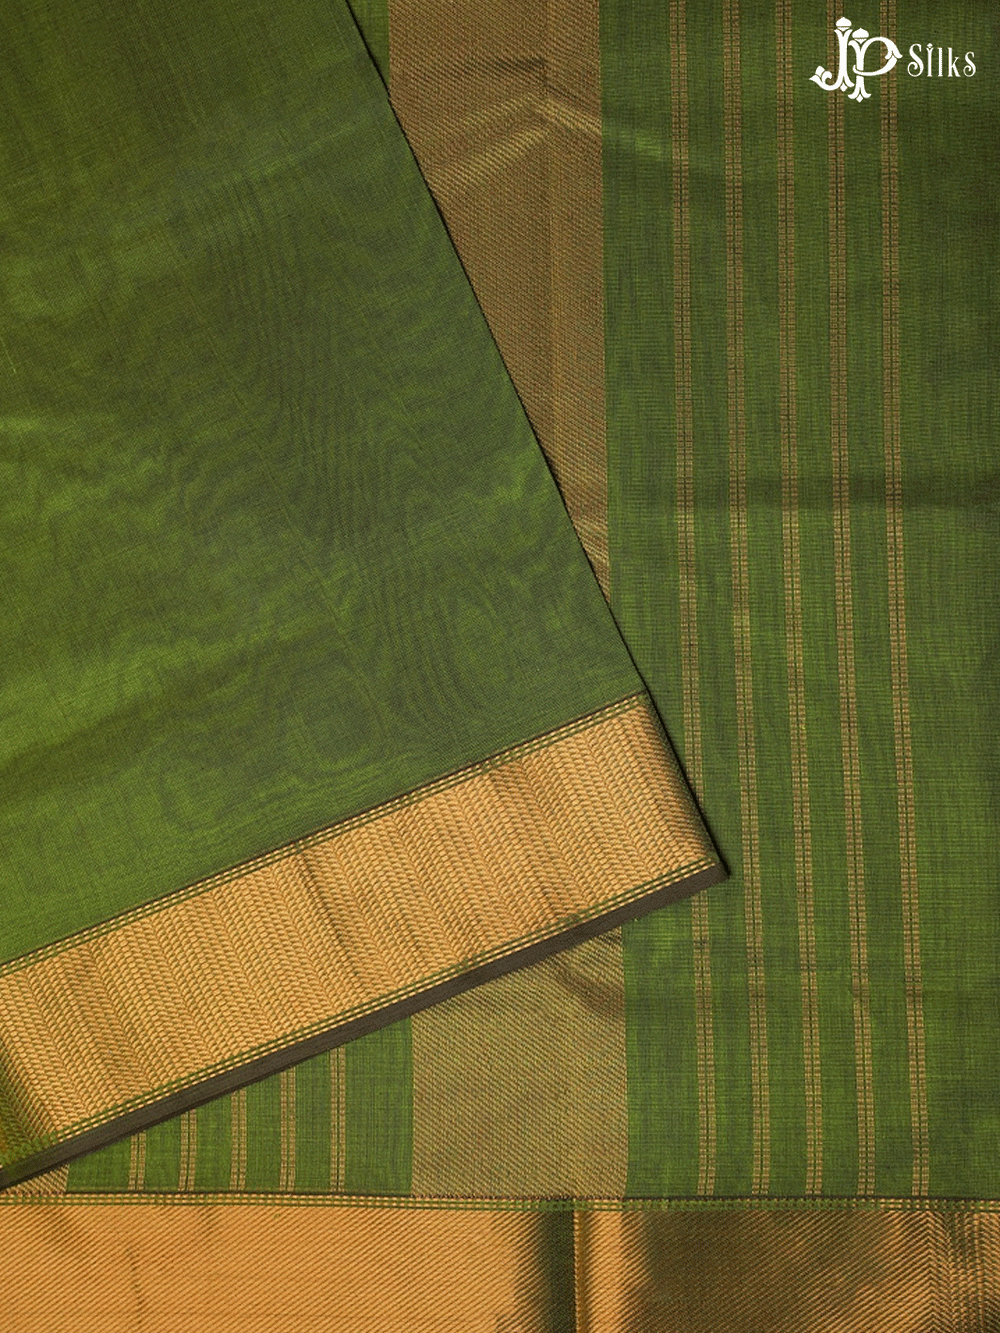  Green Silk Cotton Saree - F319 - View 1